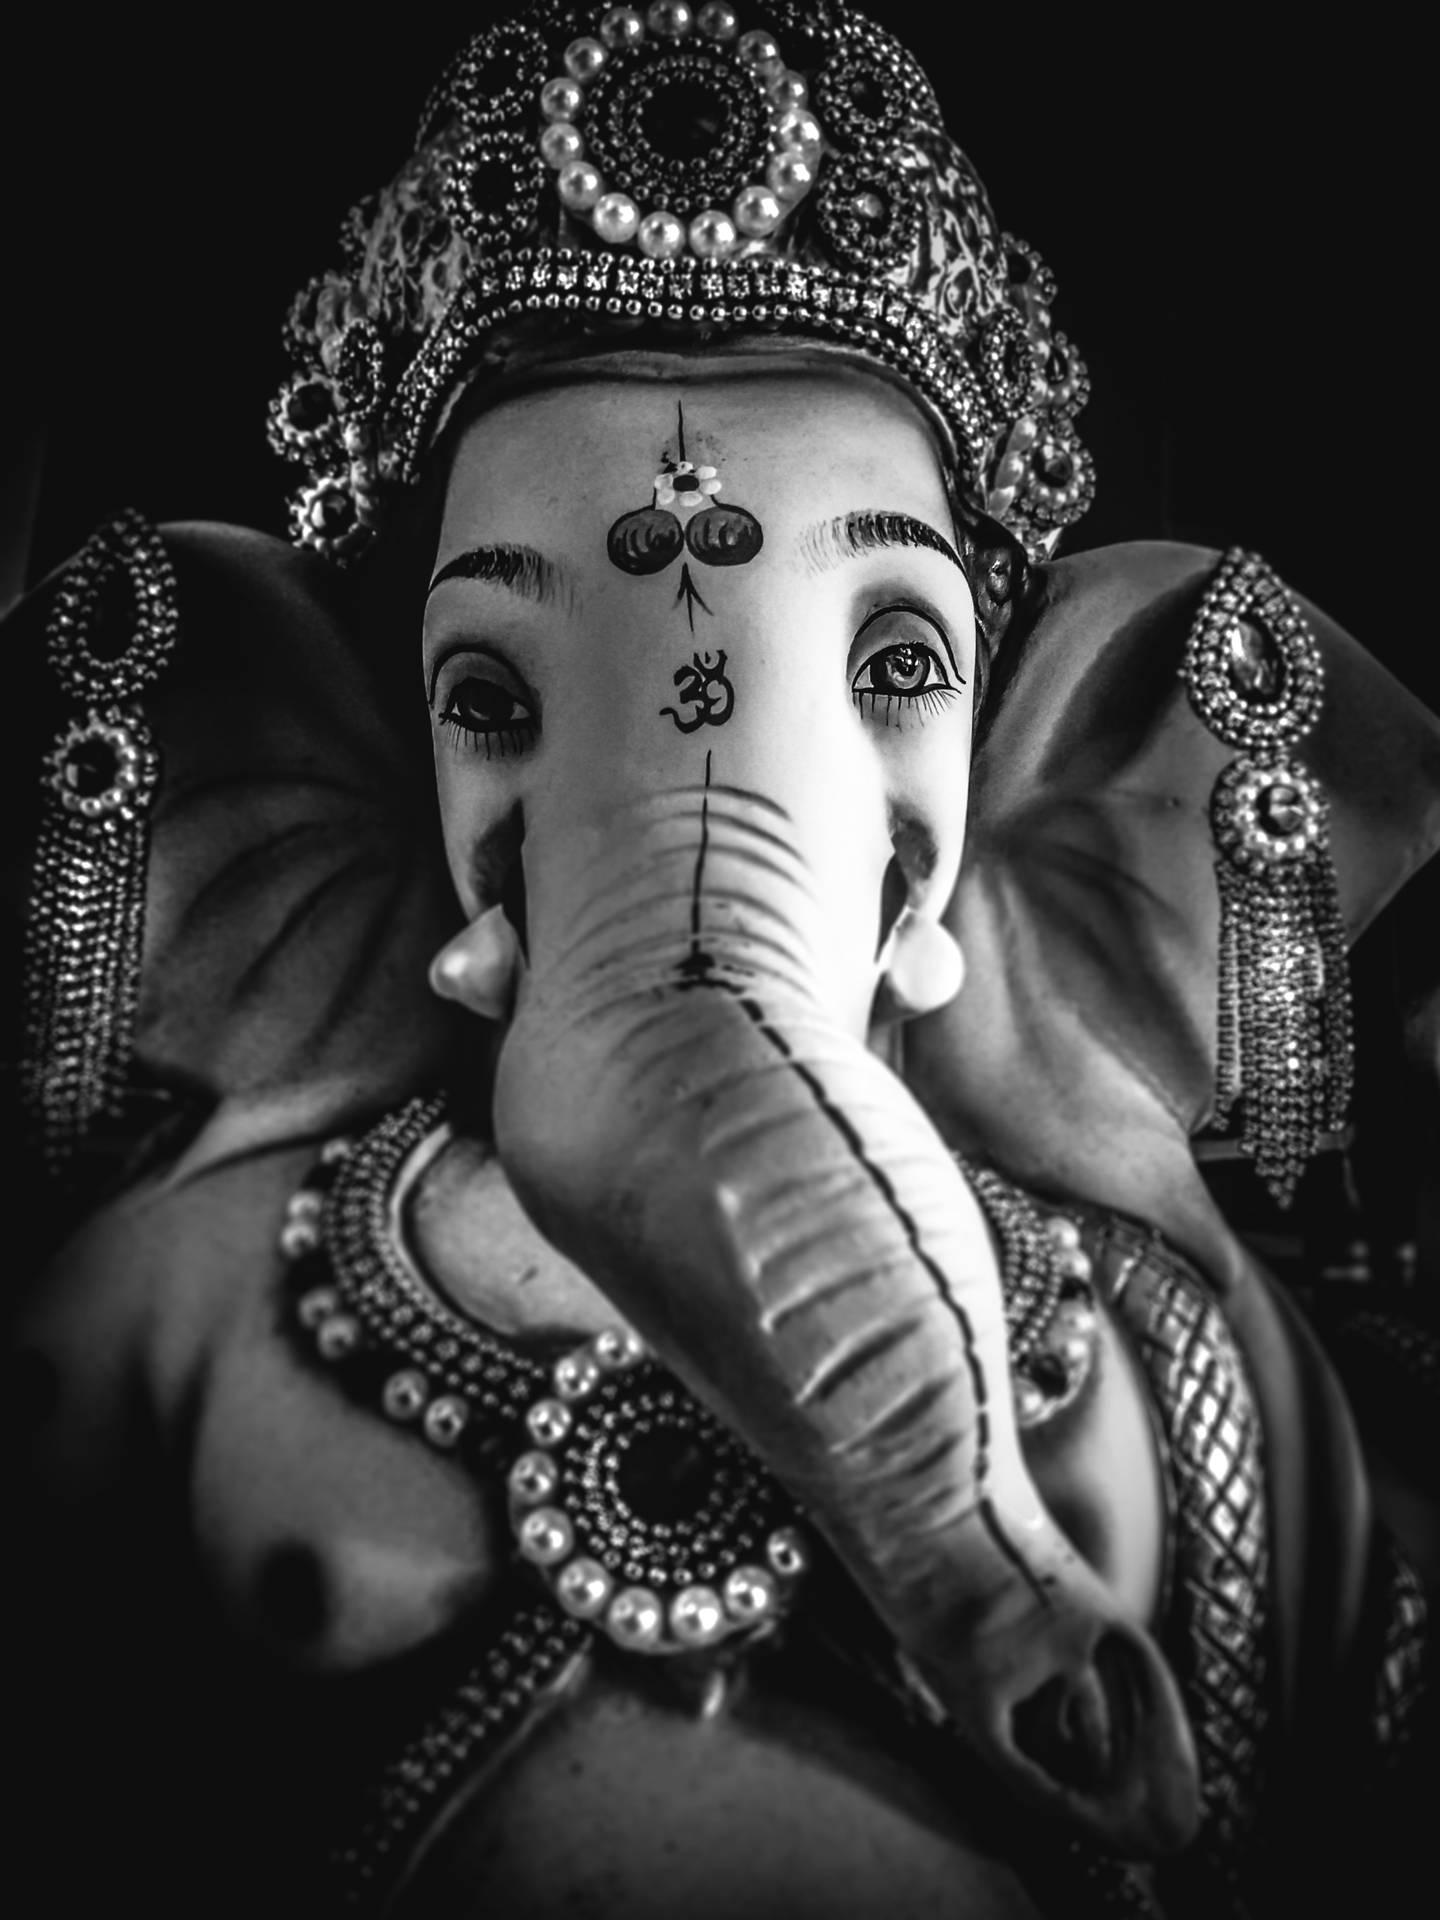 Lord ganesha sclupture over dark background. celebrate lord ganesha wall  mural • murals ganesh, sculpture, culture | myloview.com